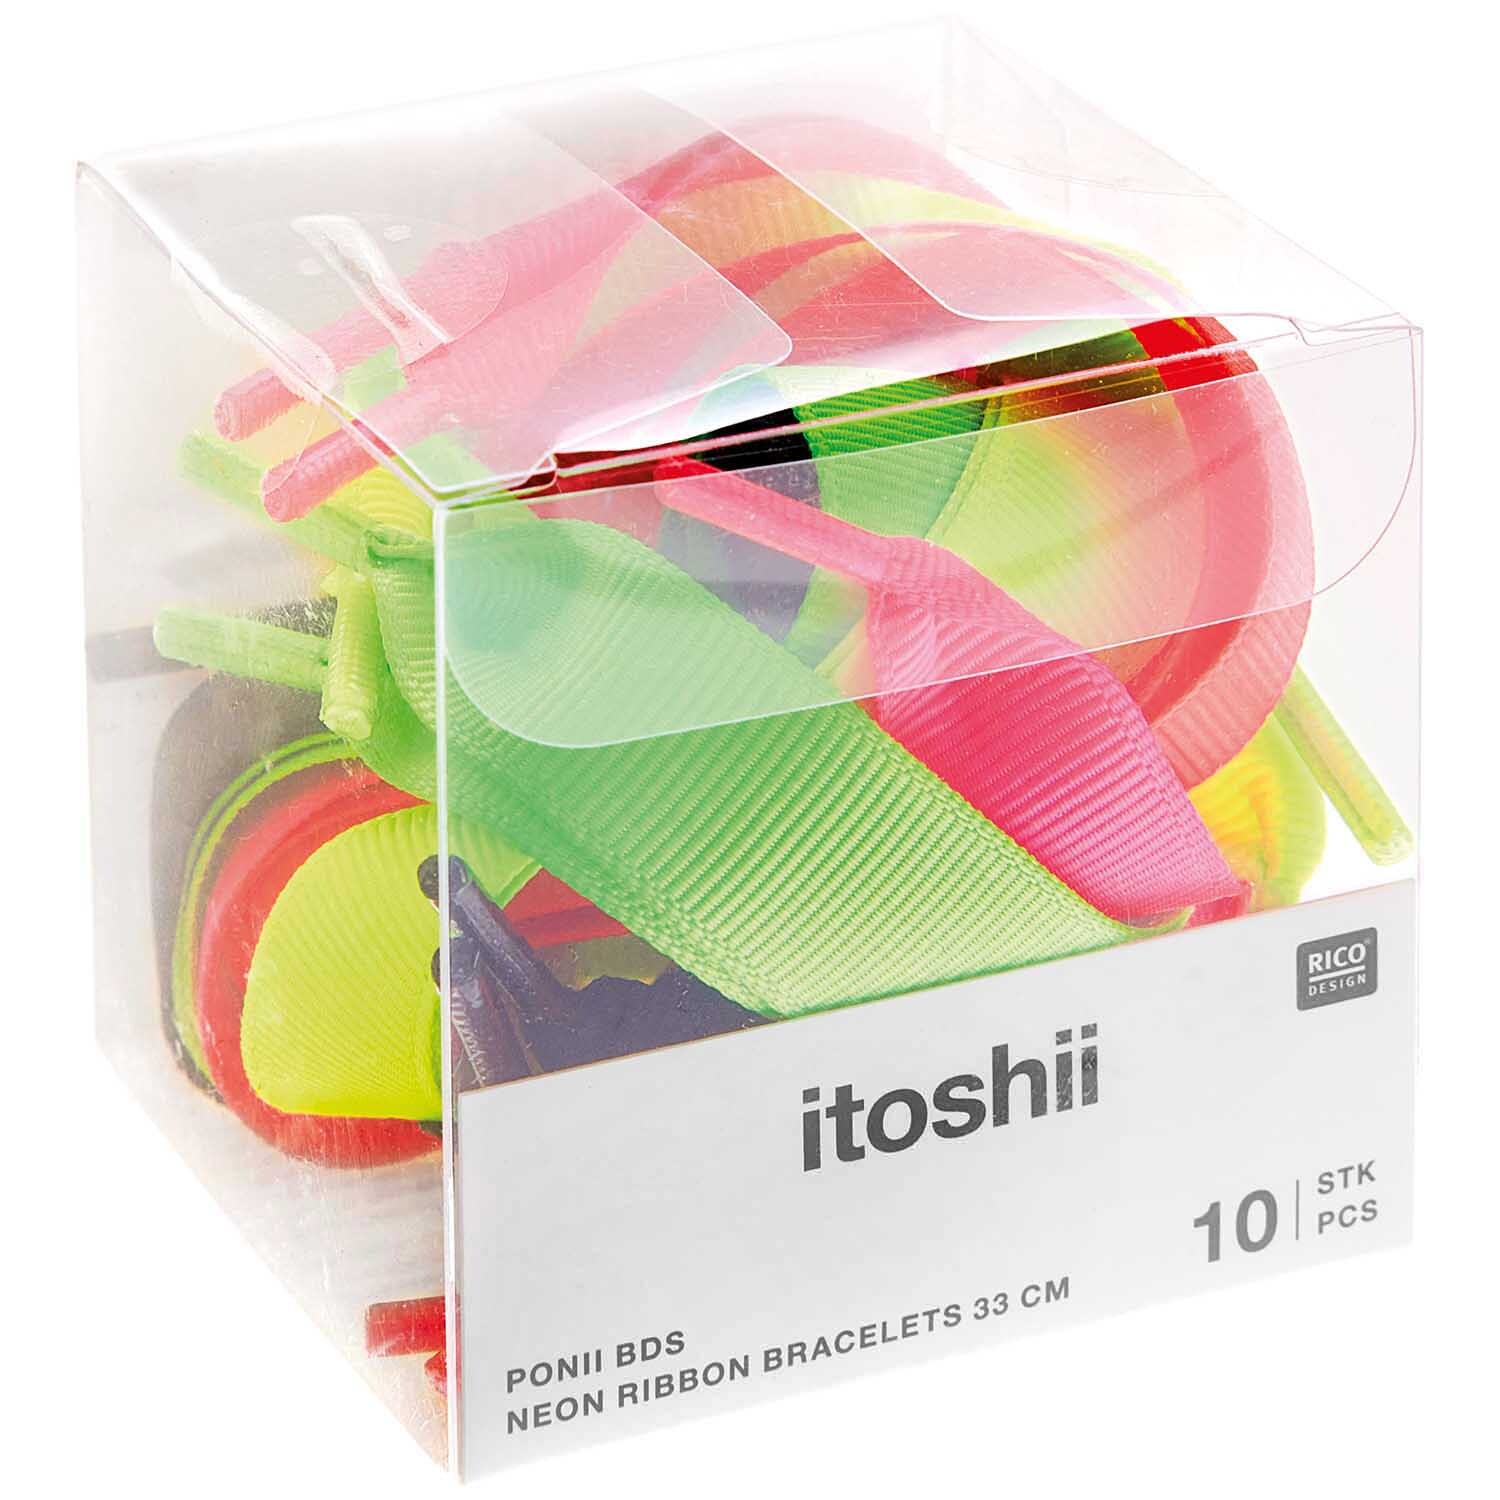 itoshii - Ponii Beads Ripsband Armbänder neon 10 Stück